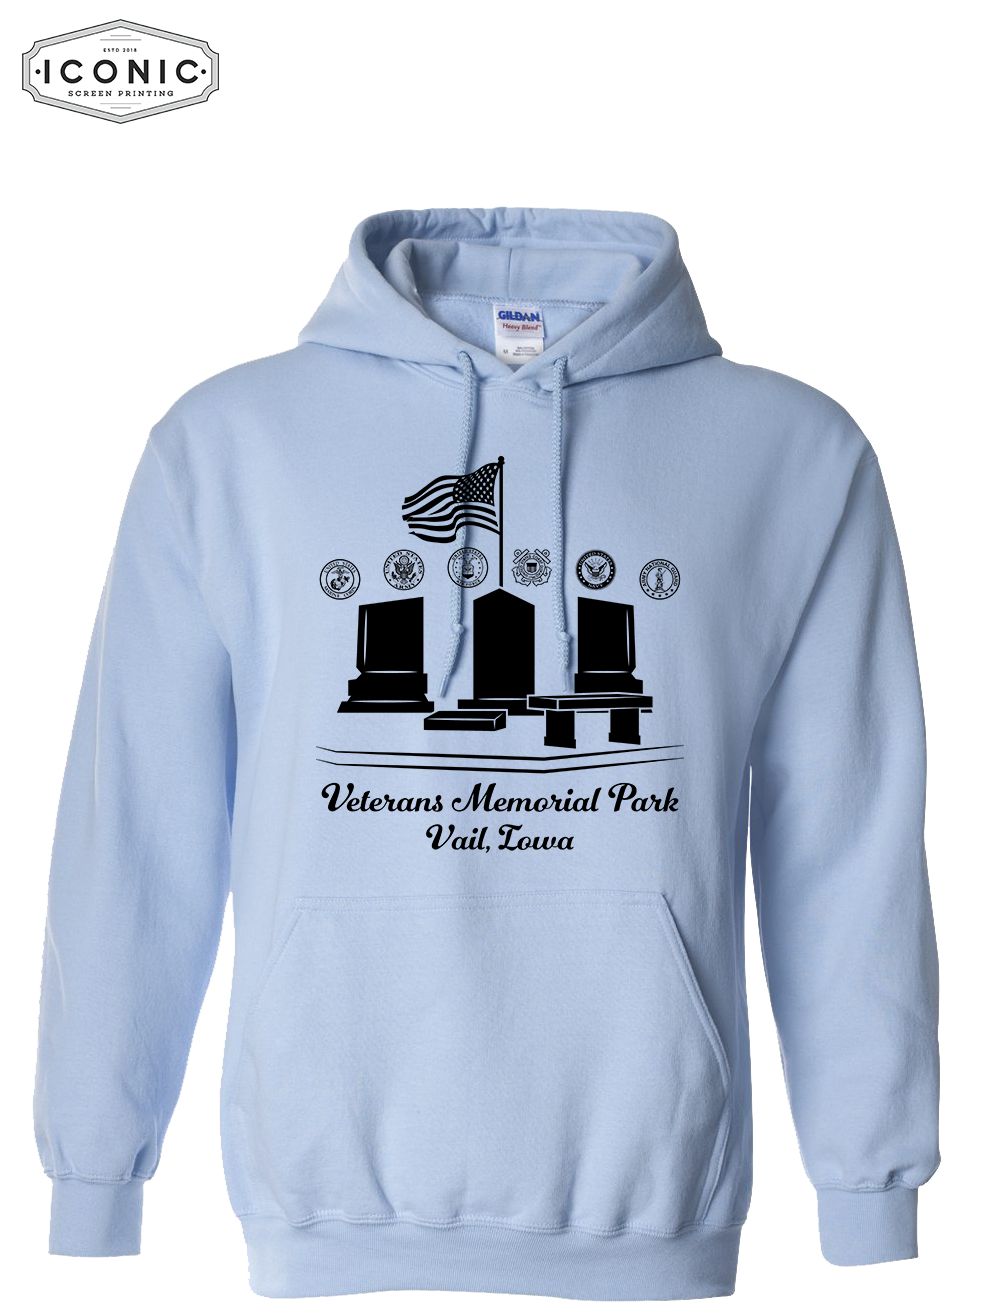 Vail's Veterans Memorial Park - Heavy Blend Hooded Sweatshirt